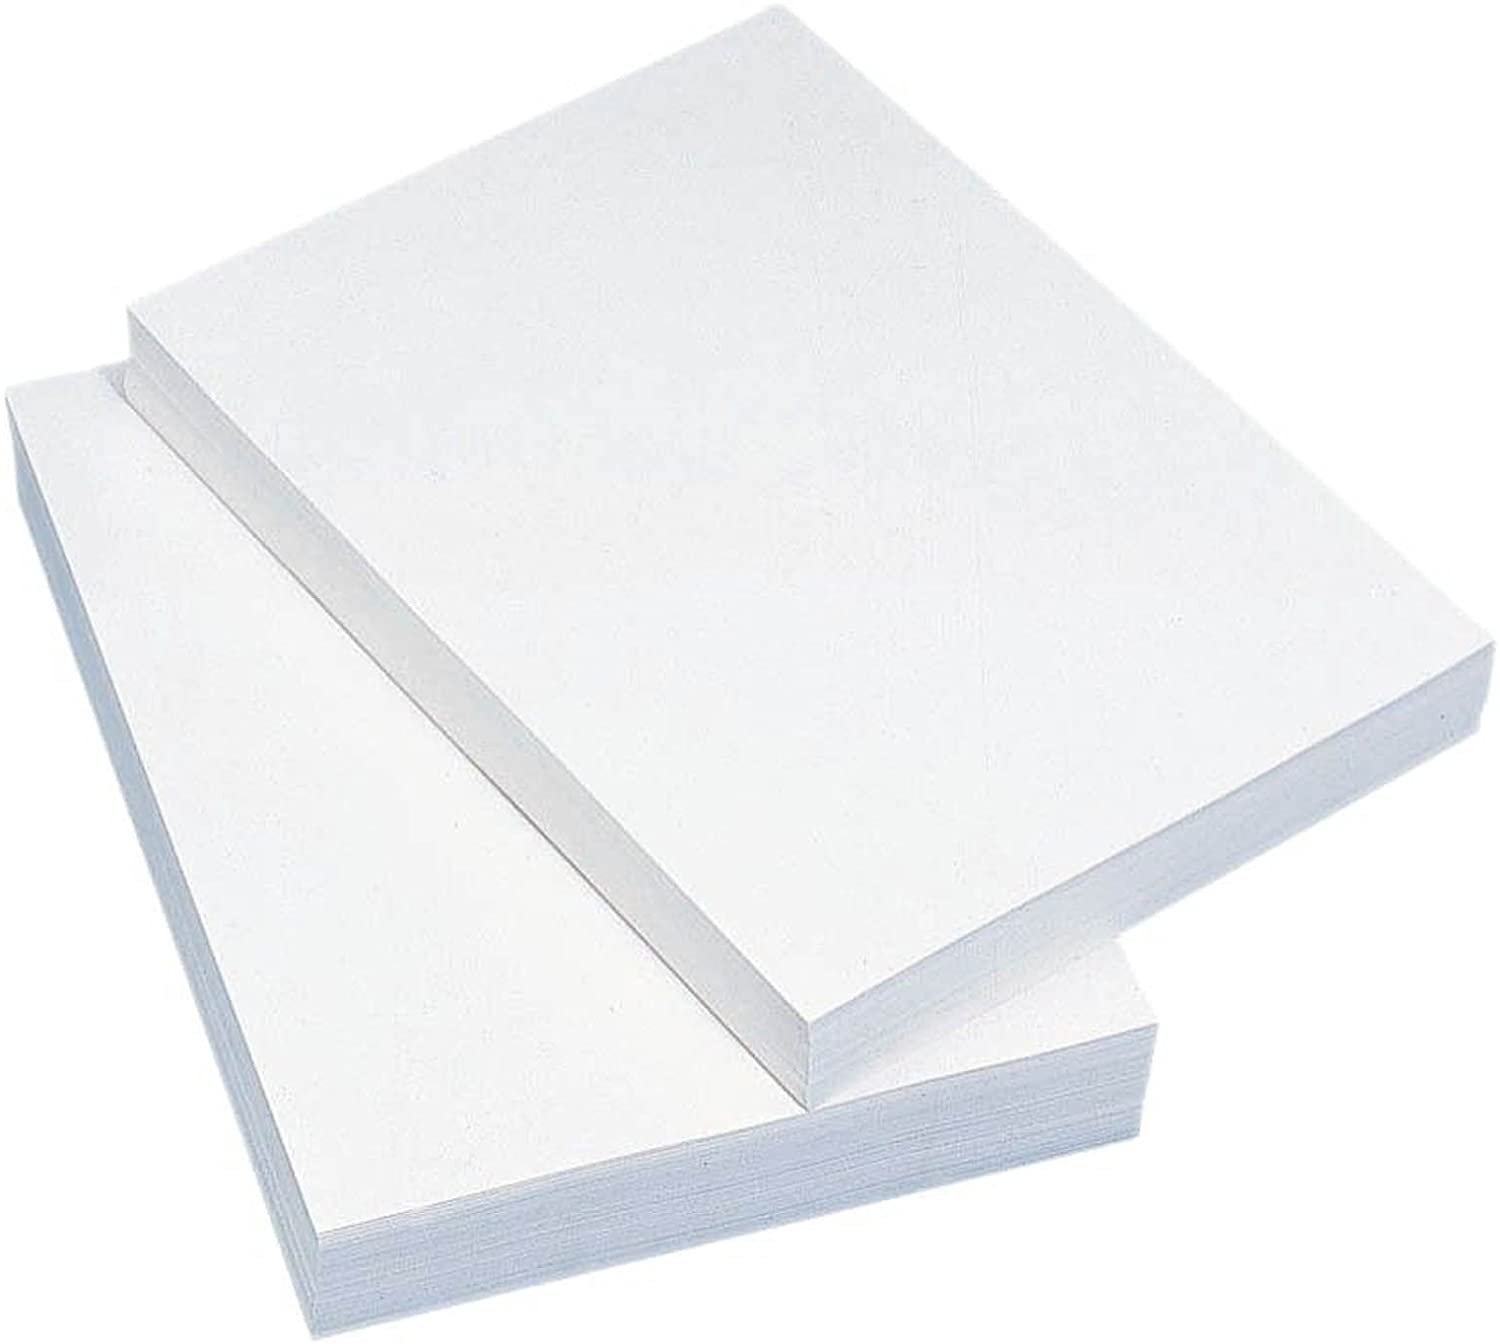 0594 A4 Paper Multipurpose Earth-Friendly Copier Paper - SkyShopy